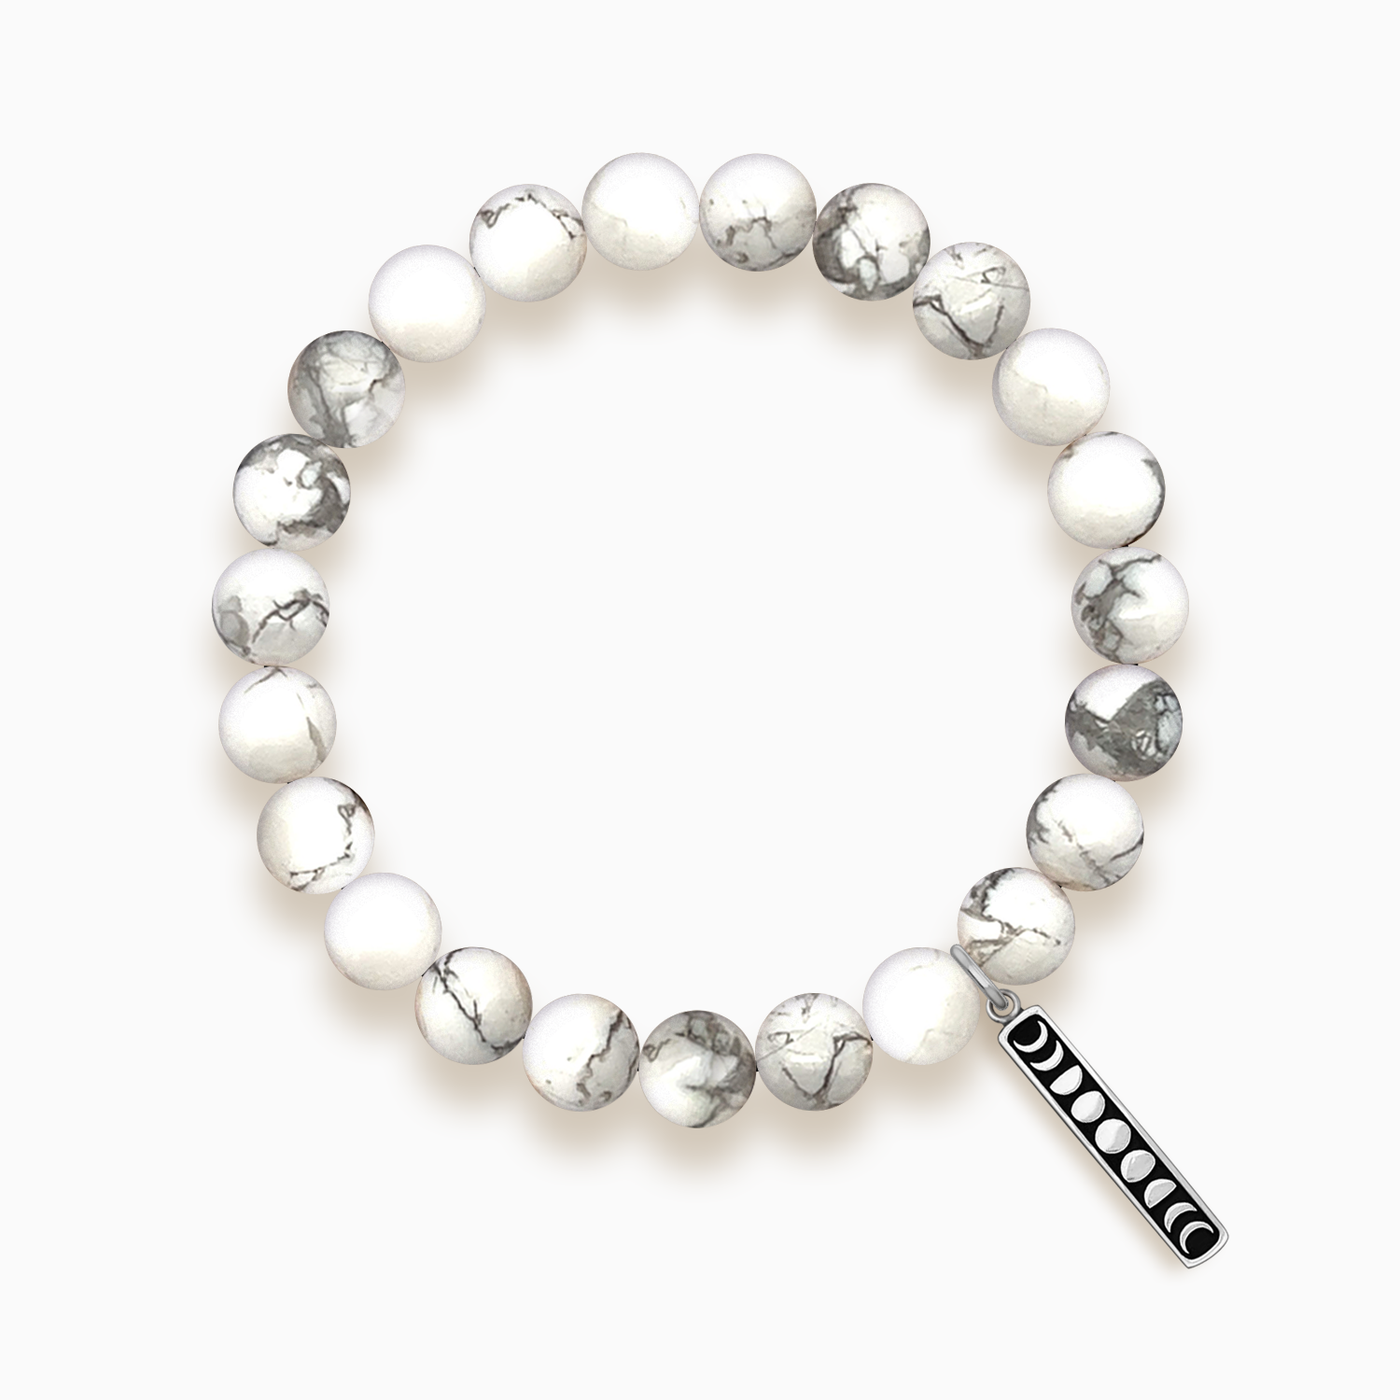 Gemstone Stacker Bracelet With Moon Phase Charm